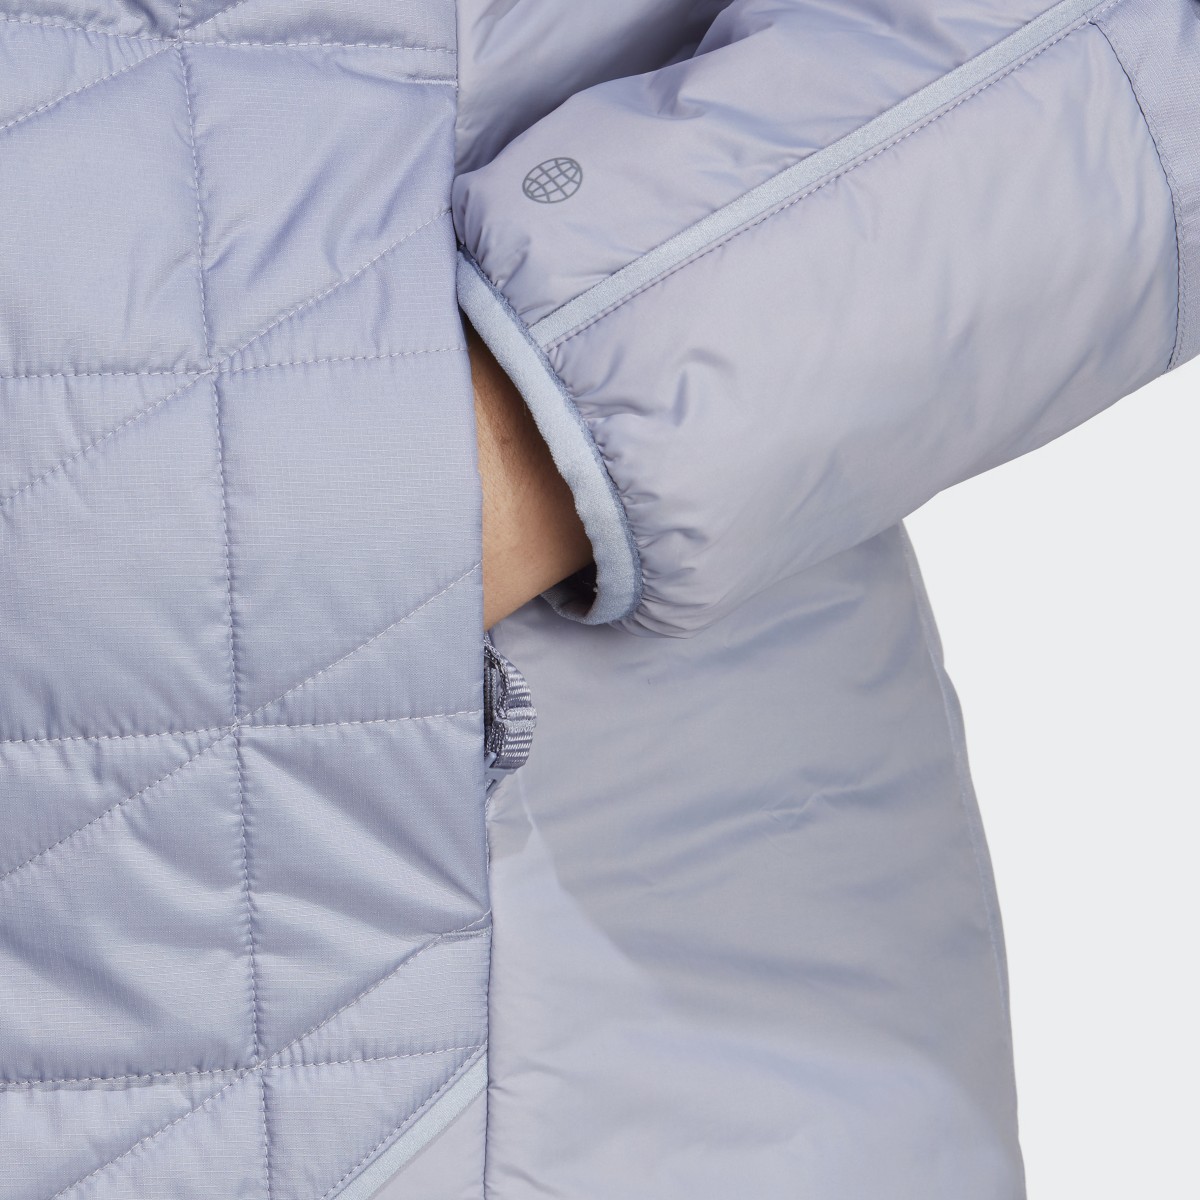 Adidas Terrex Multi Insulated Jacket (Plus Size). 6